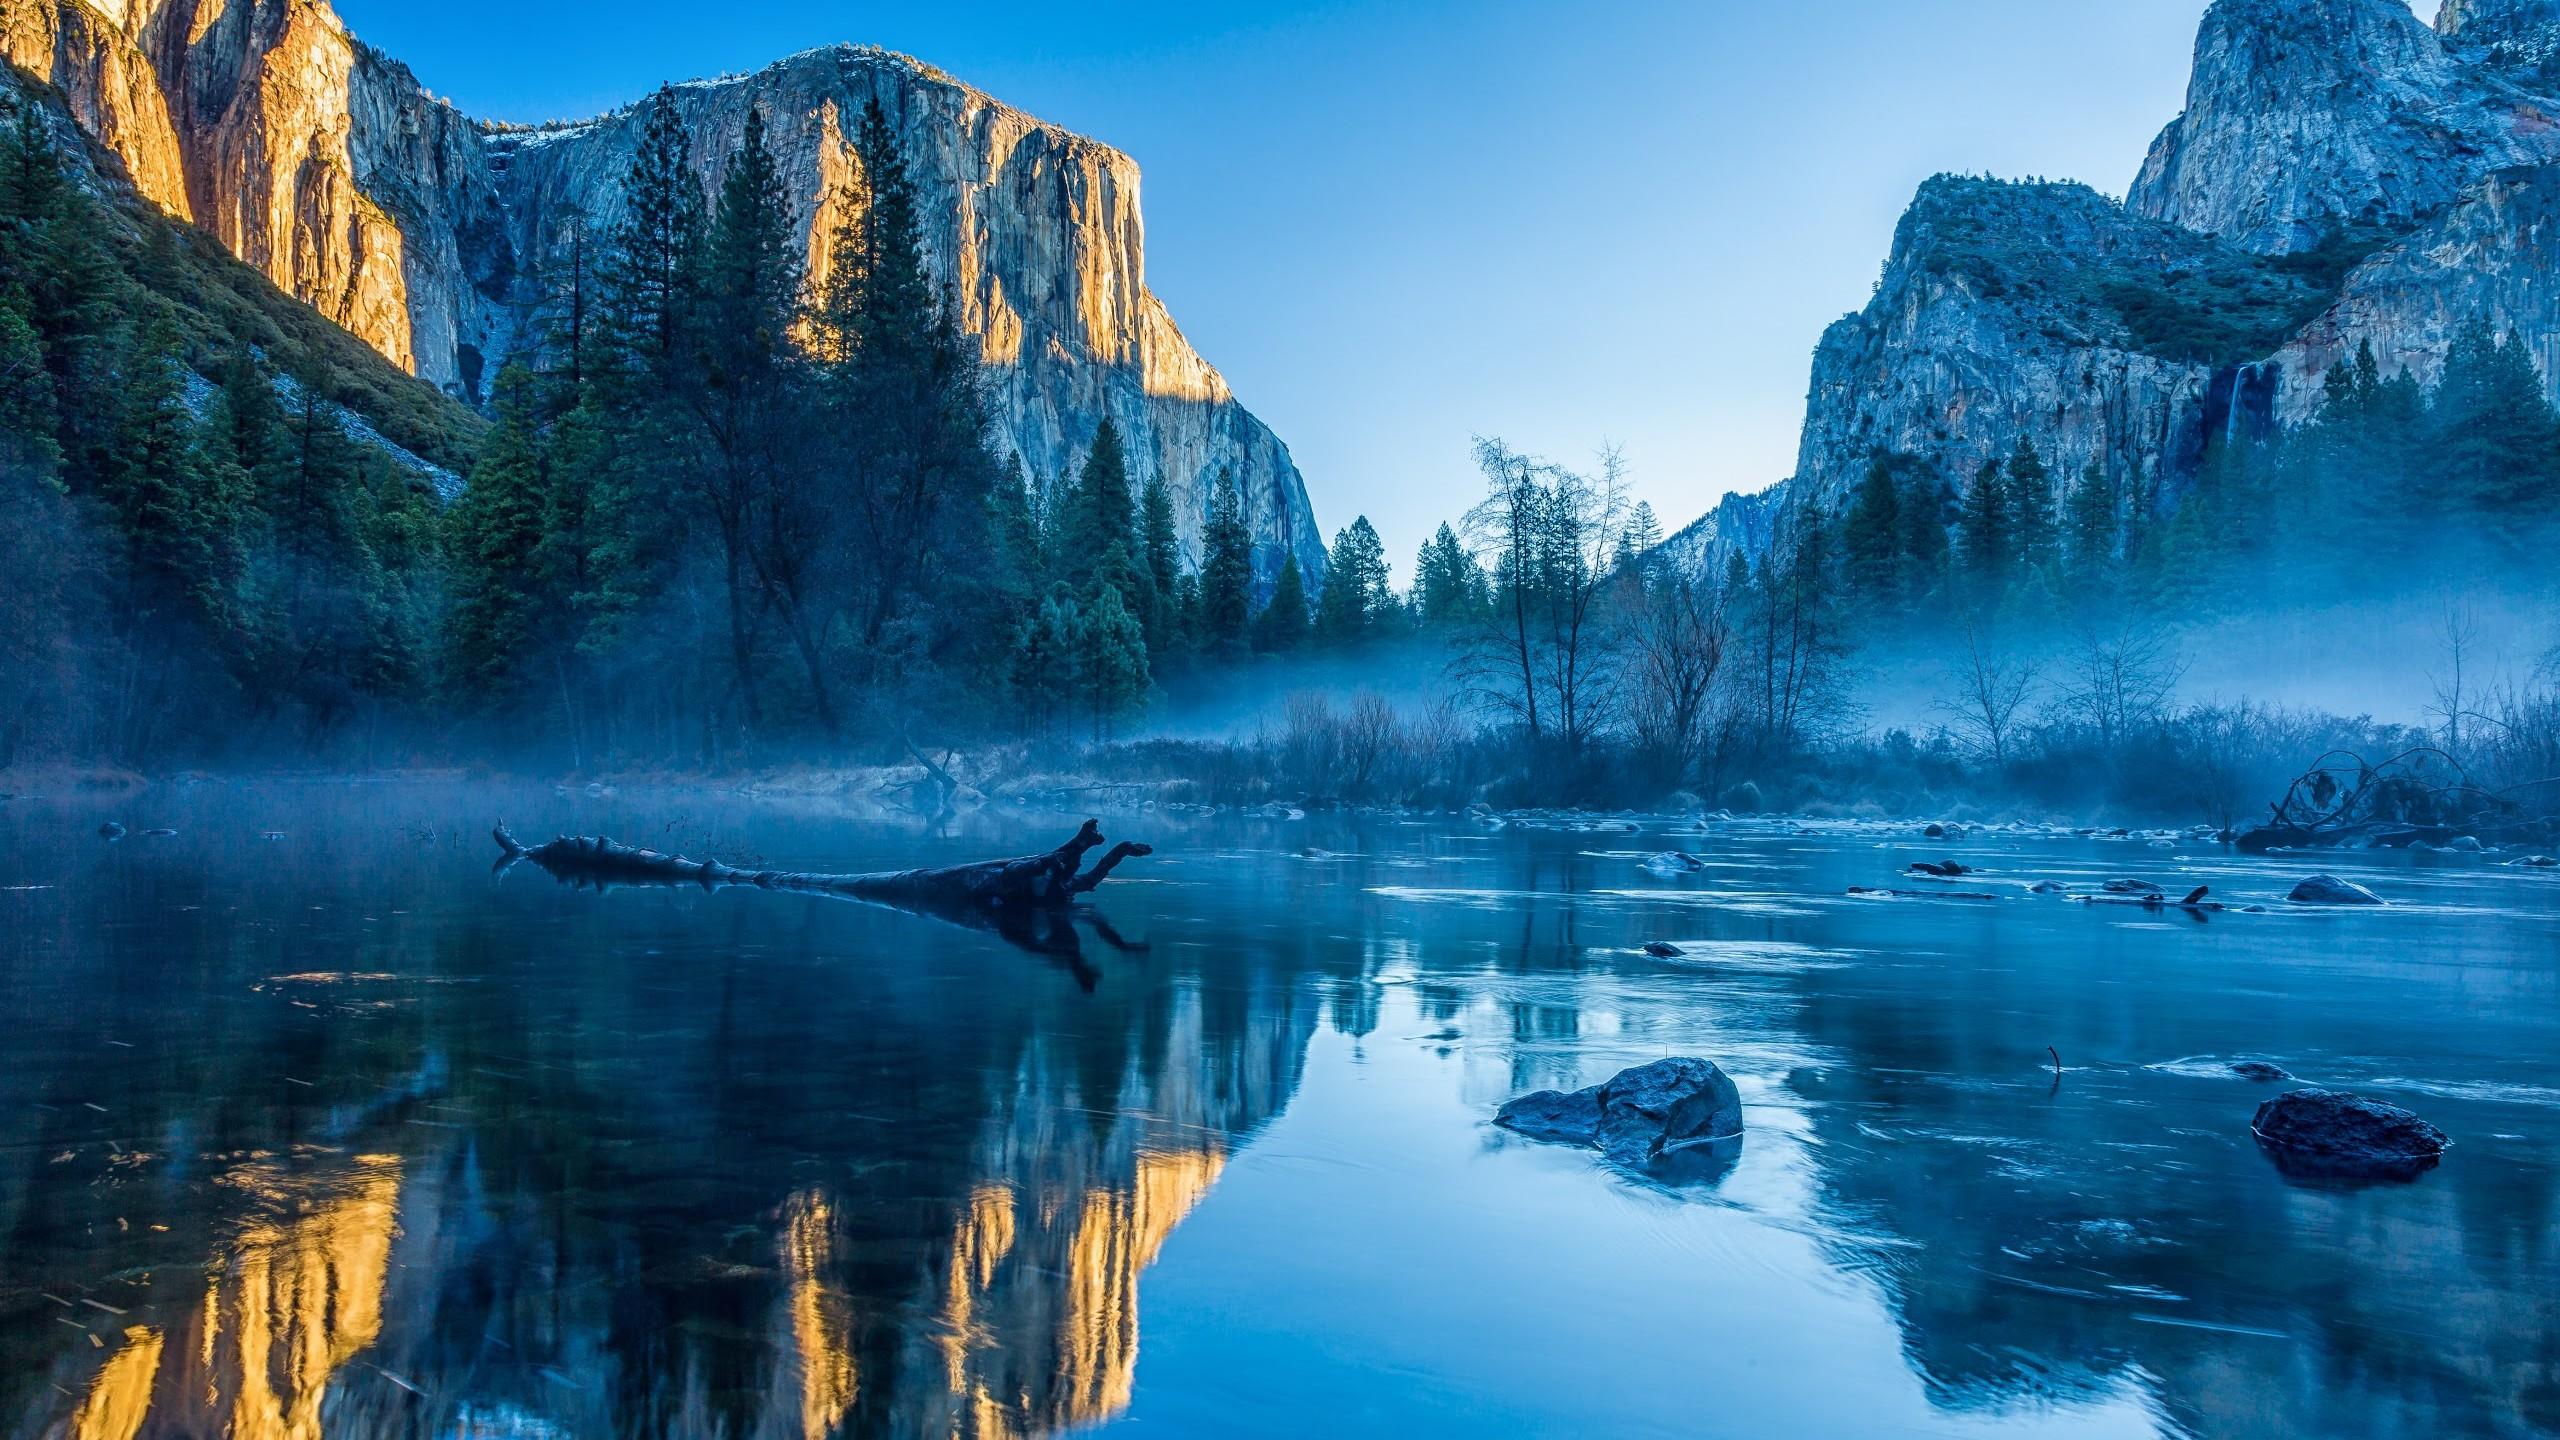 Wallpaper Yosemite, El Capitan, HD, 4k wallpaper, winter, forest, OSX, apple, mountains, Nature